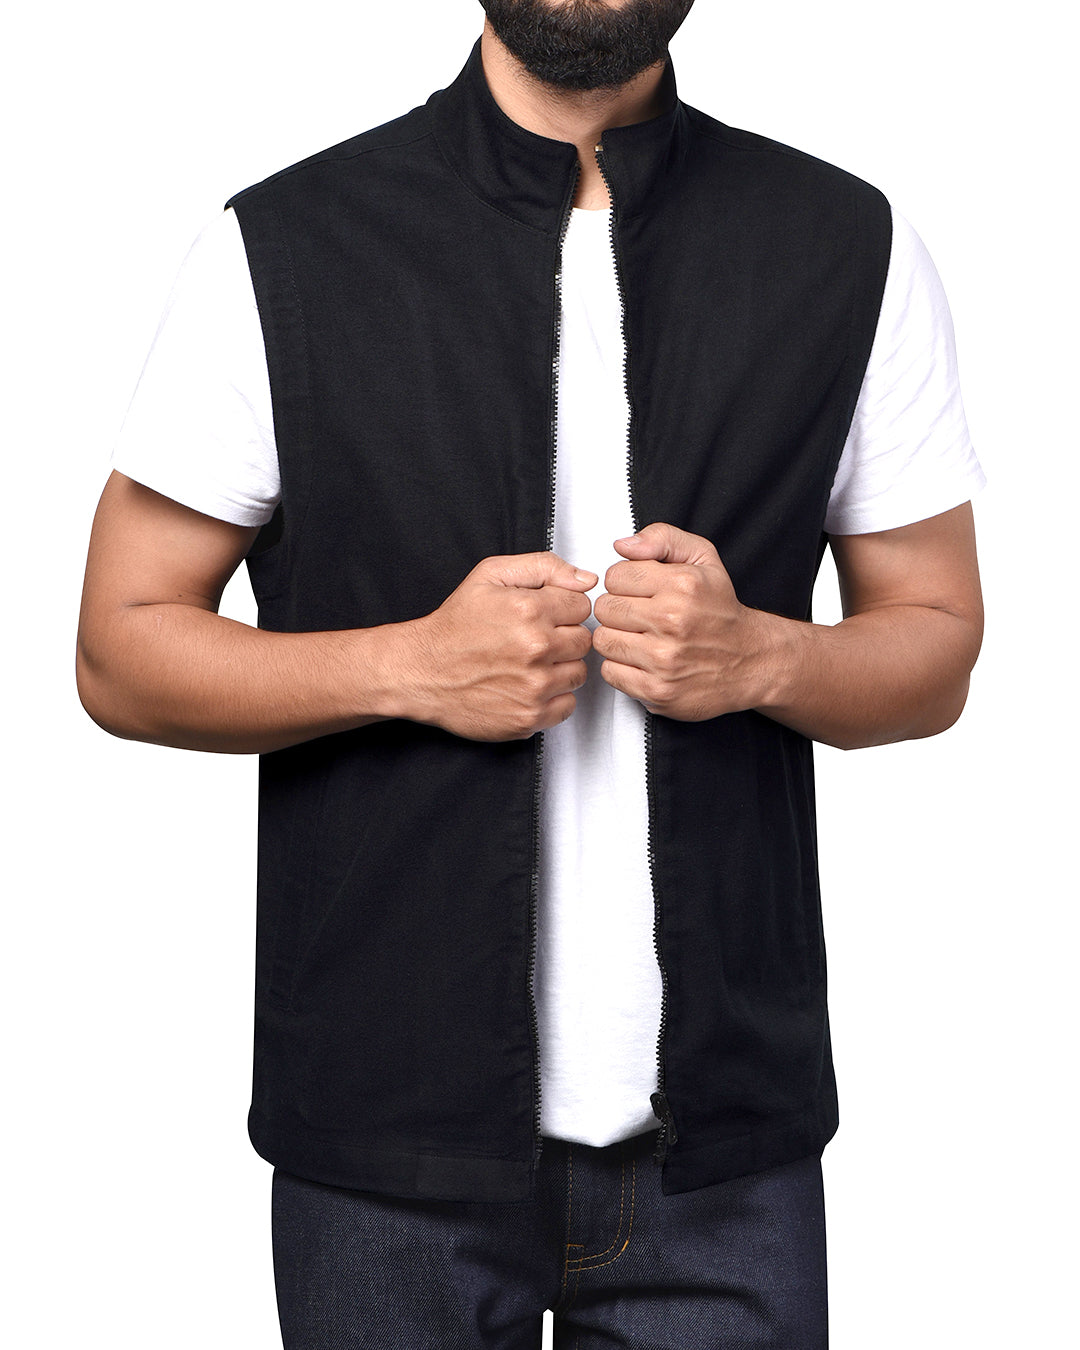 Vest in Performance Chino Black